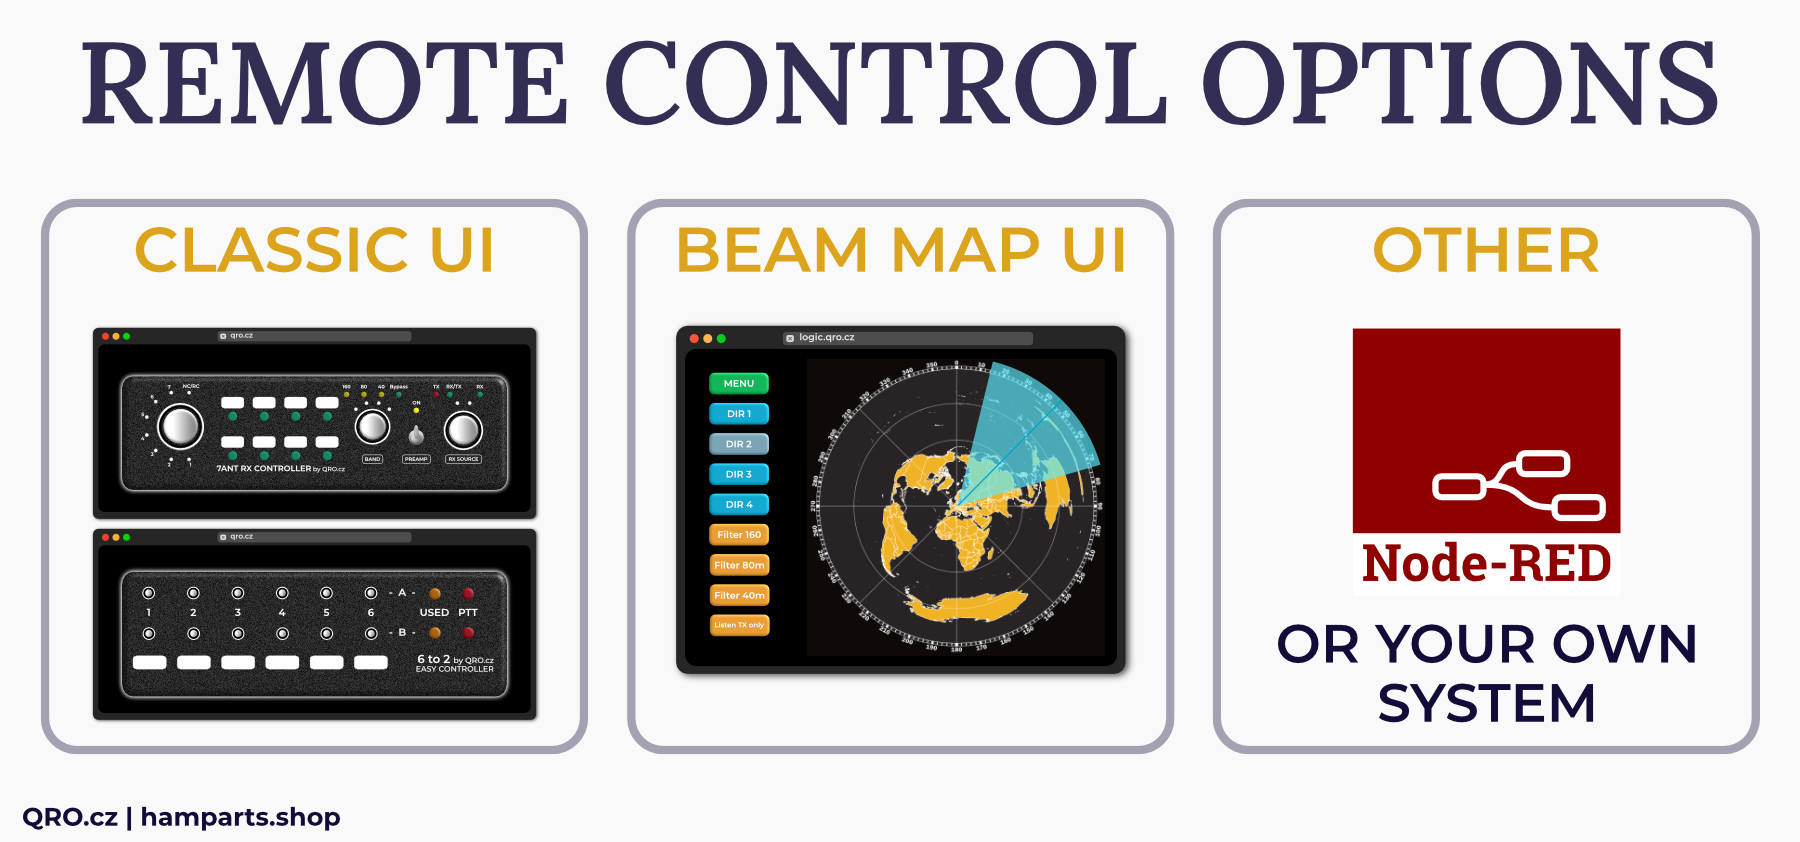 OLI IP 12 controller control options by qro.cz hamparts.shop